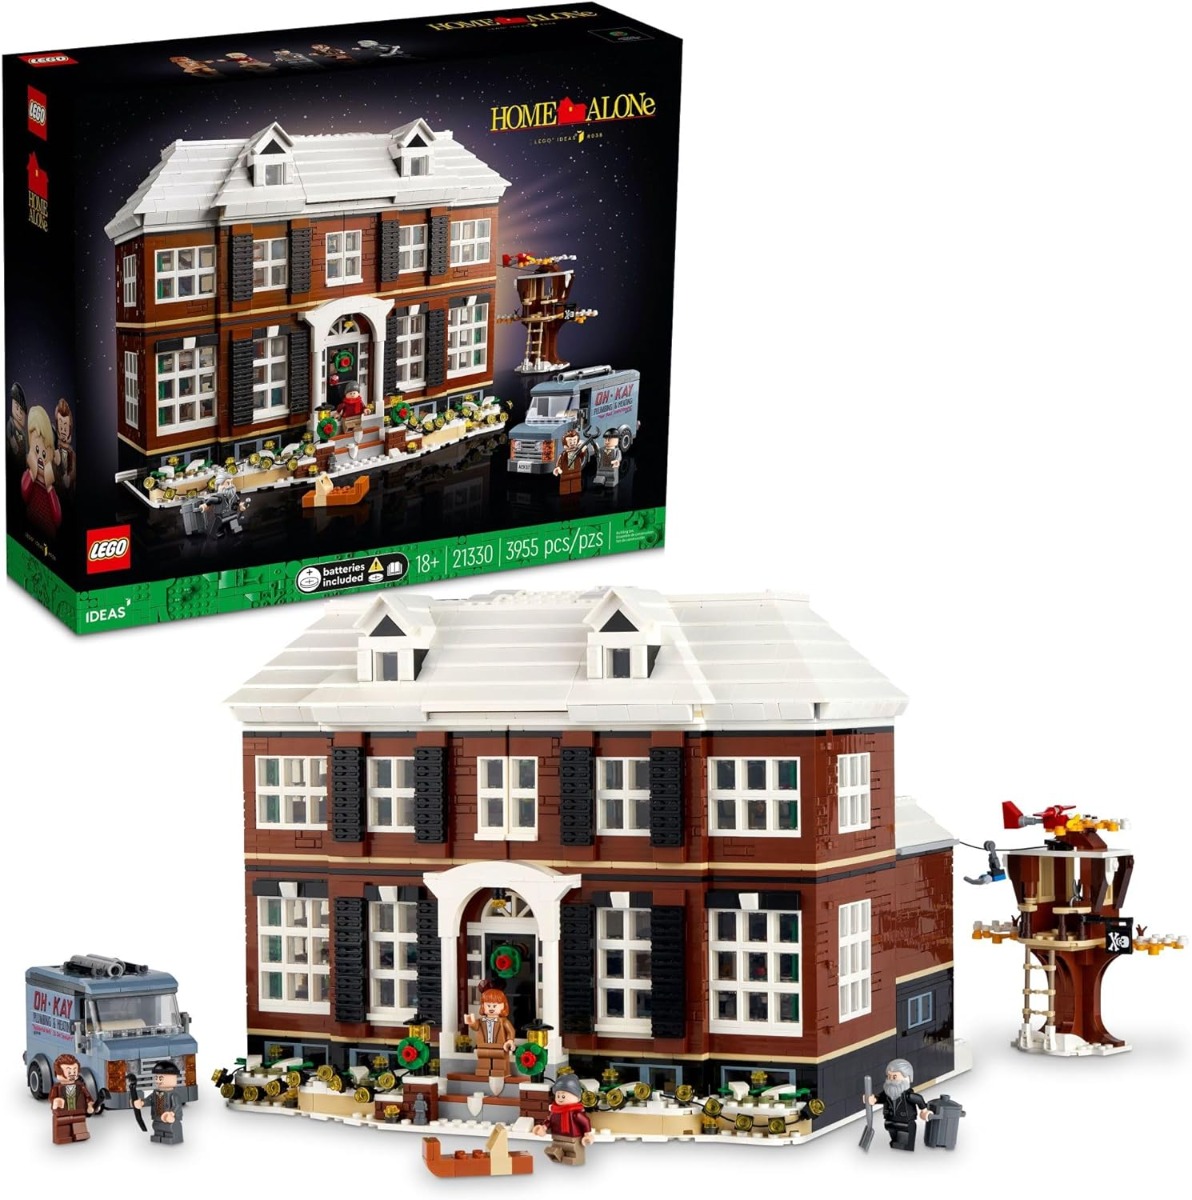 LEGO 21330 Ideas Home Alone Building Kit (3955 pcs)